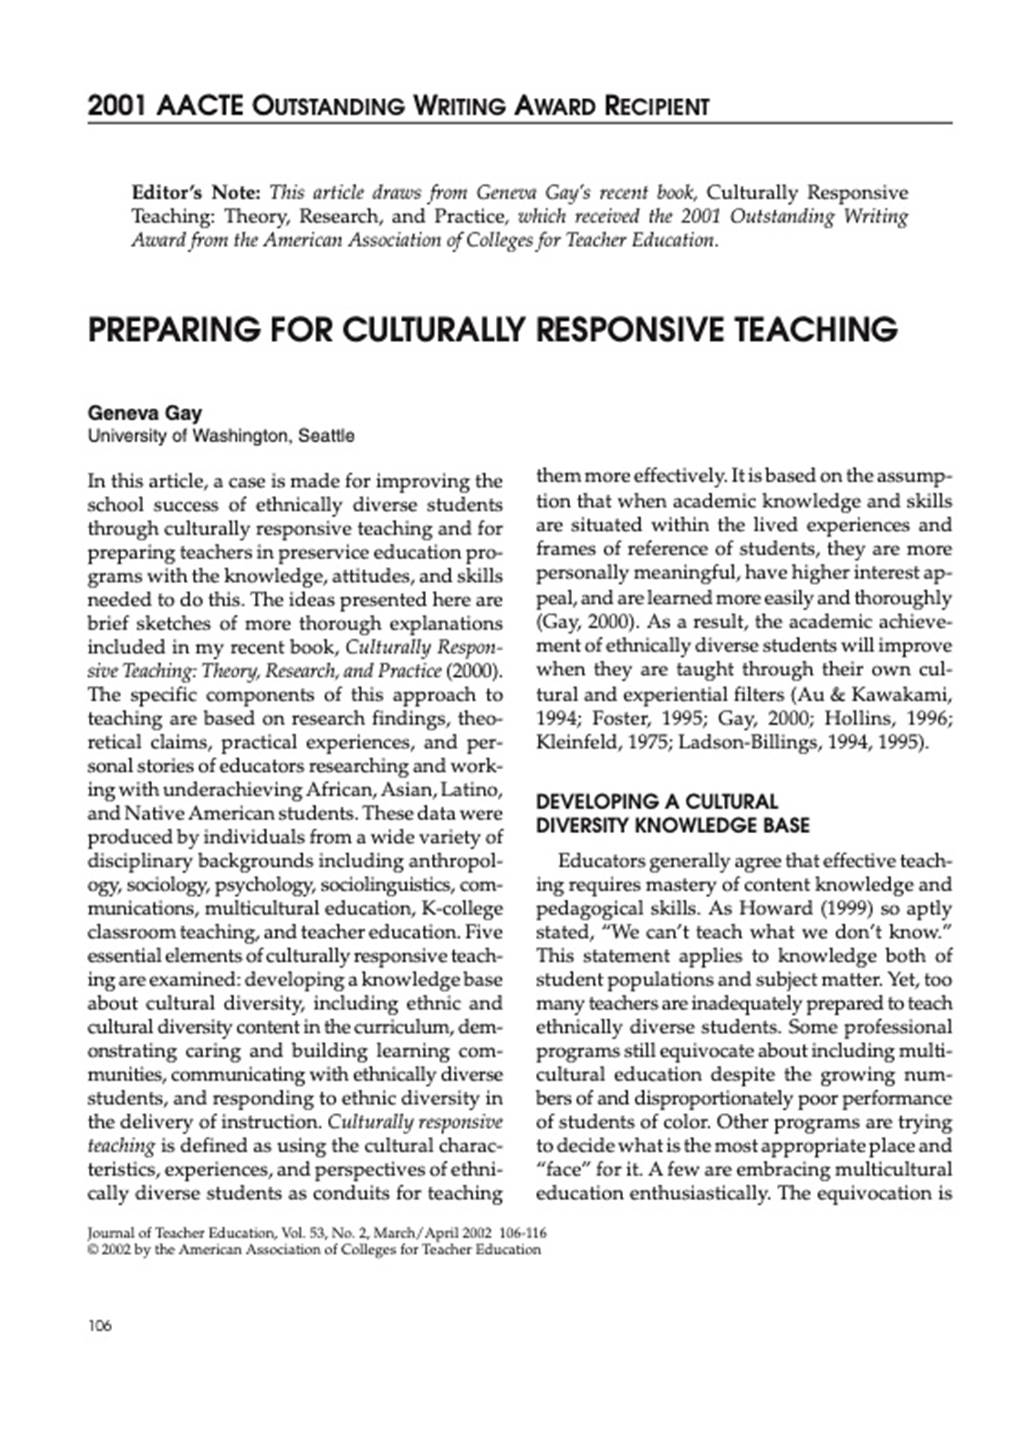 Preparing for Culturally Responsive Teaching Image